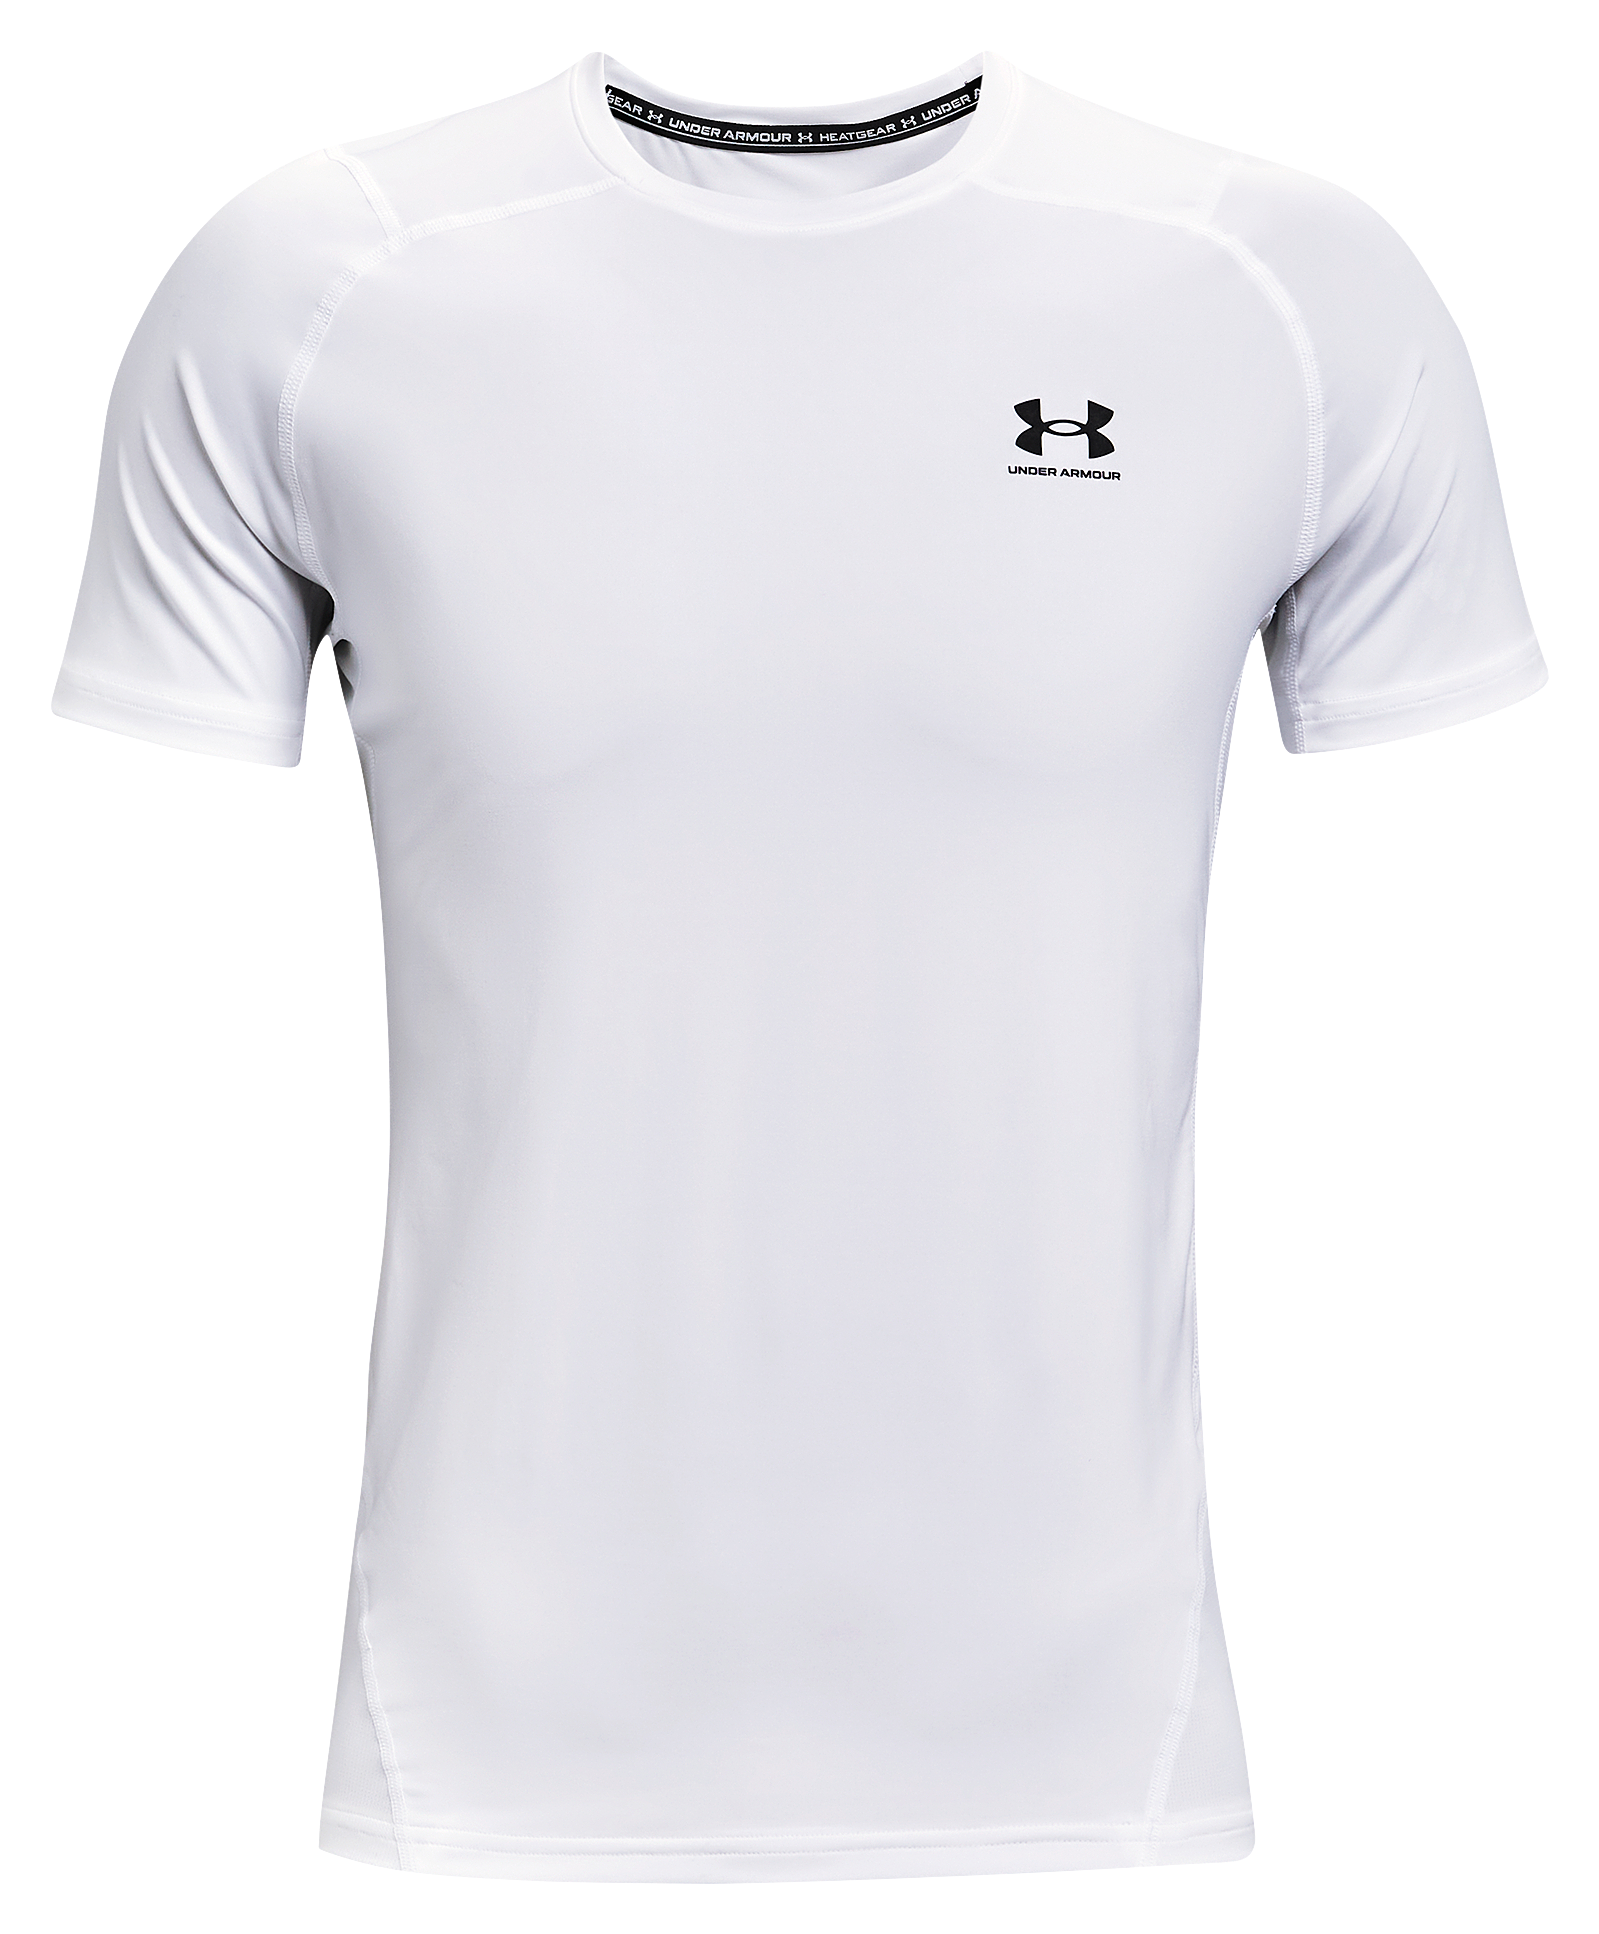 Under Armour HeatGear Fitted Short-Sleeve T-Shirt for Men - White - 2XLT